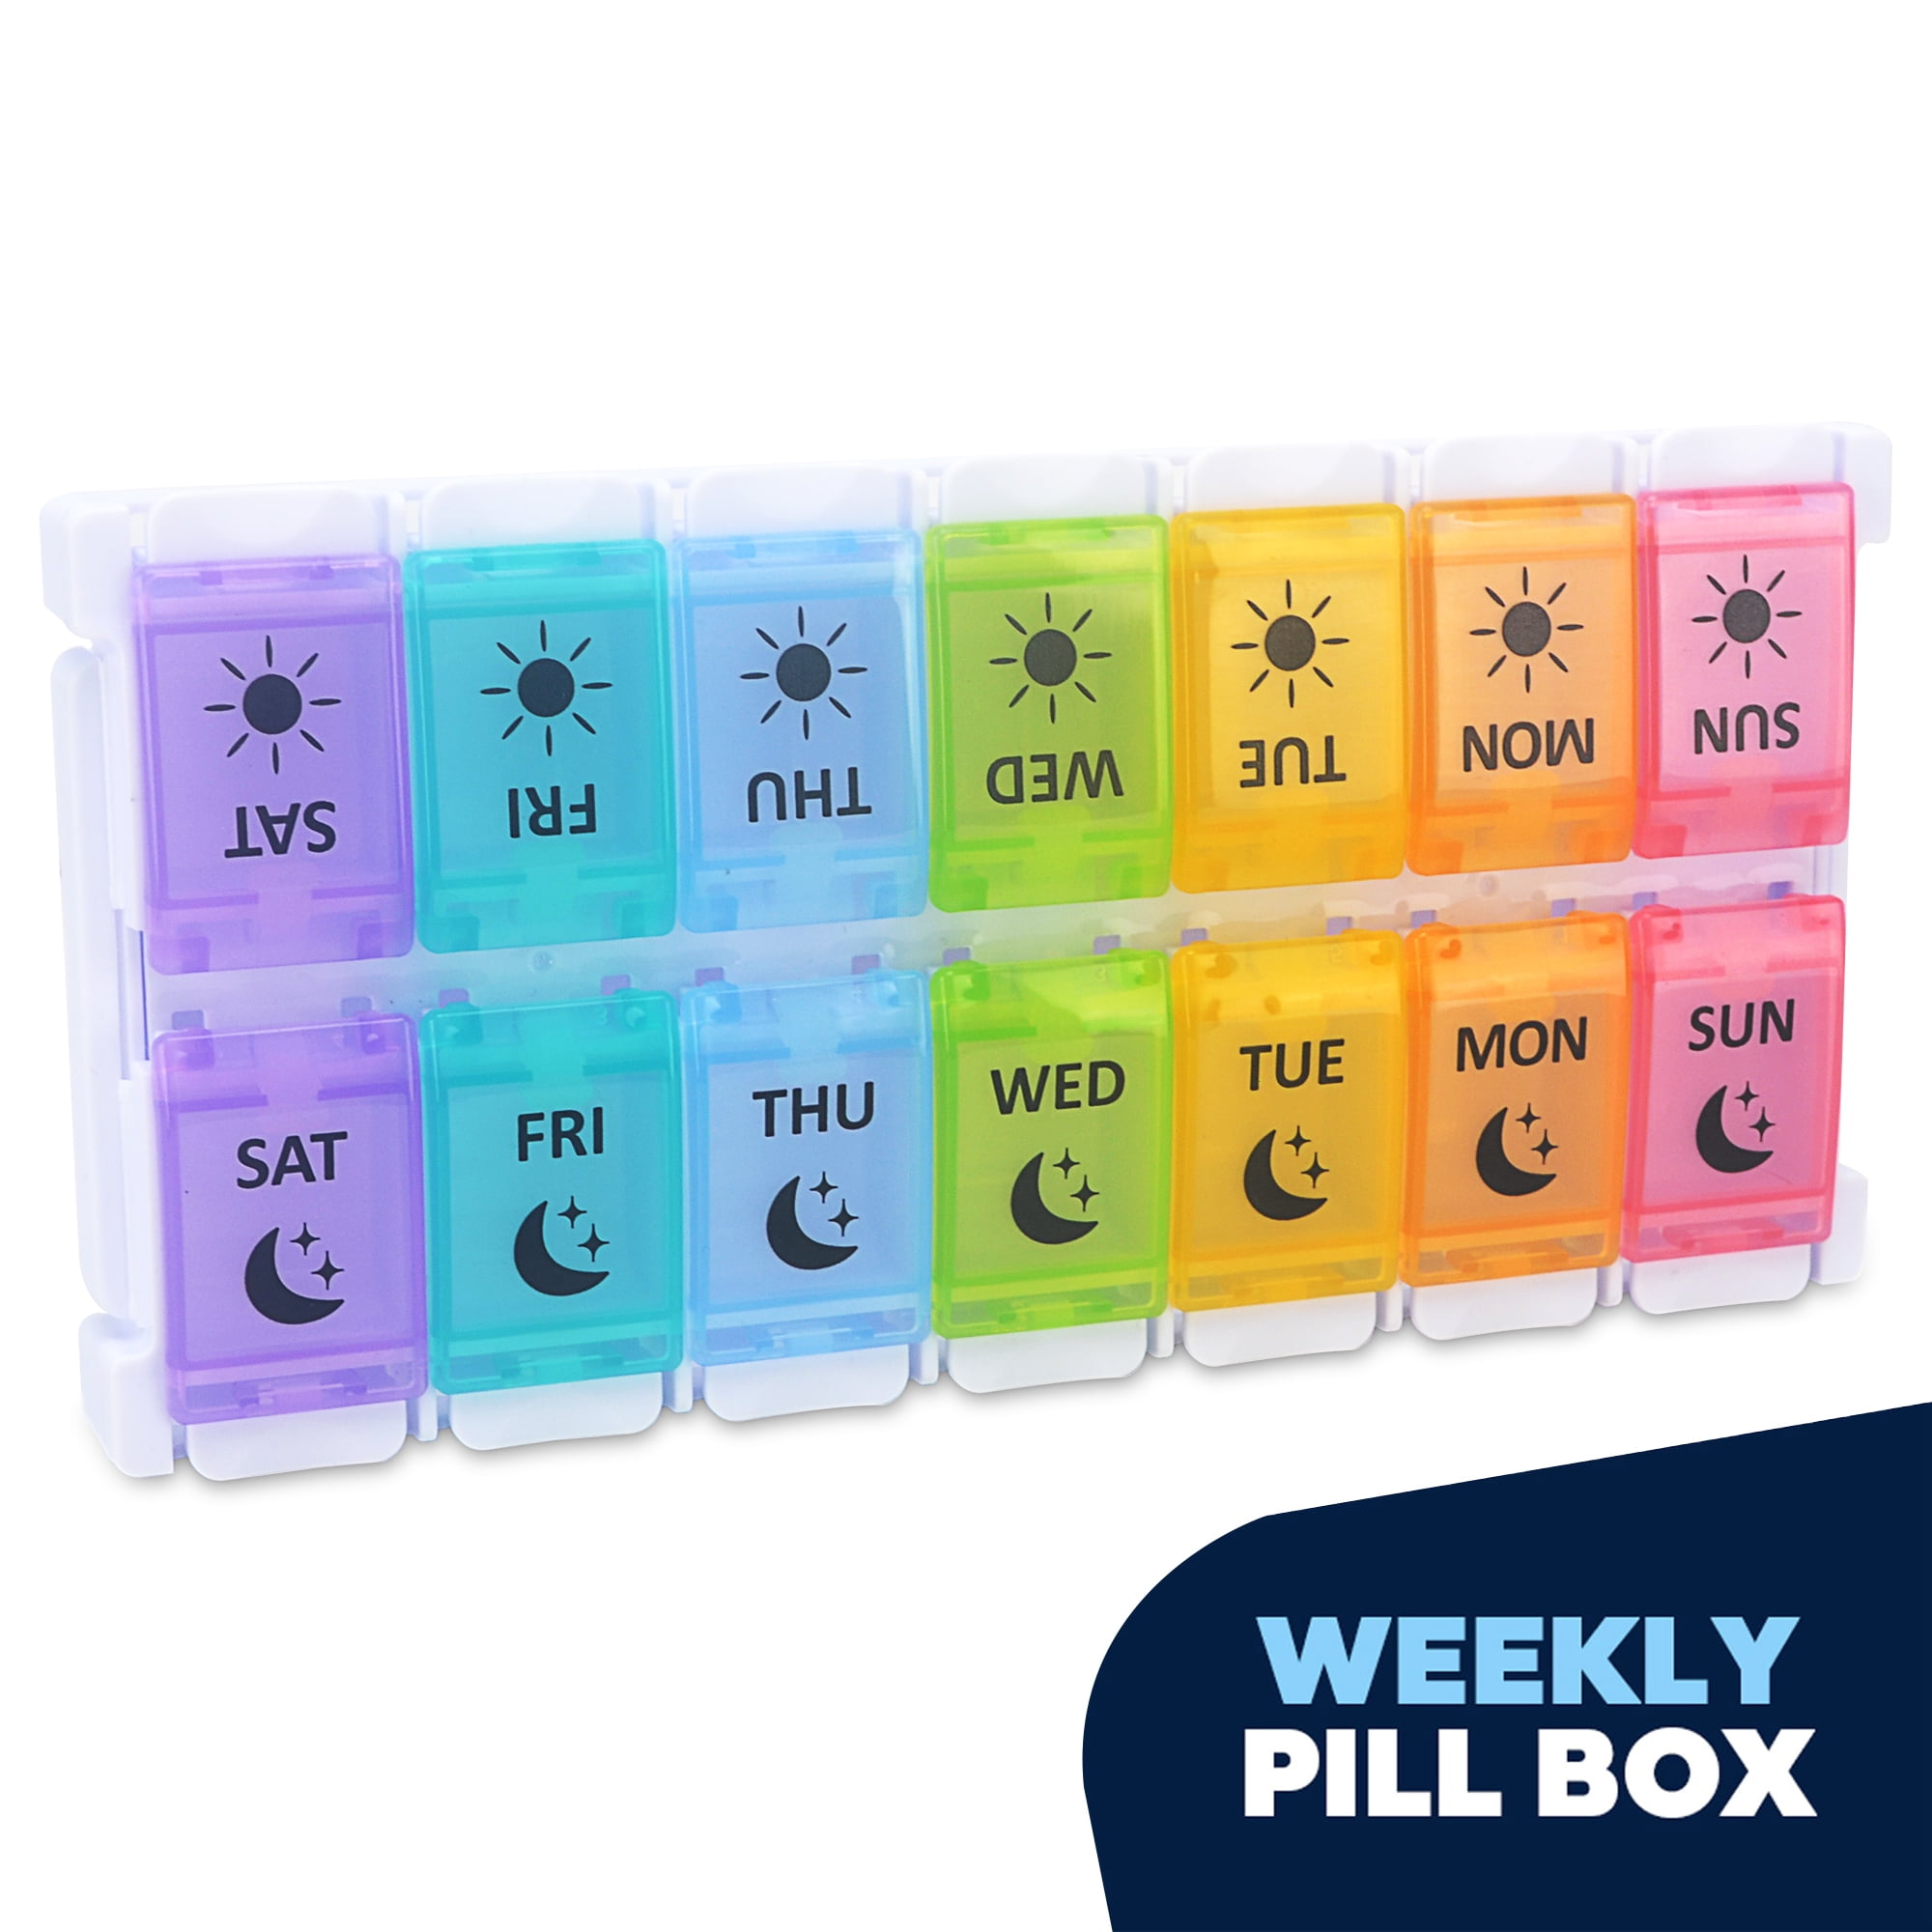 MediShot 2 Times a Day x 7 Day Pill<br>Supplement Powder Organizer